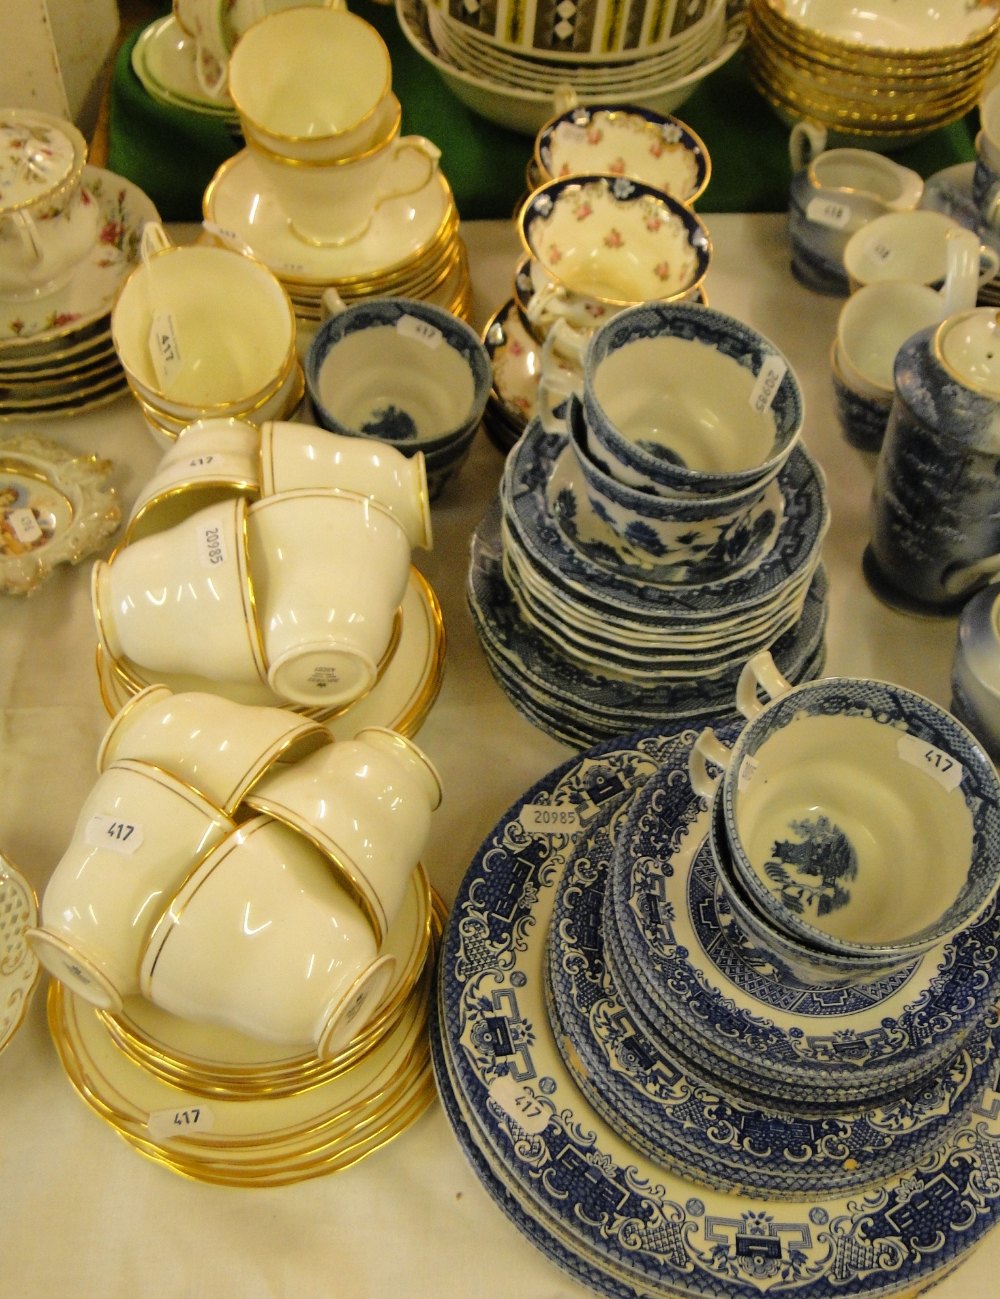 Duchess china "Ascot" teaware, blue and white teaware, etc.